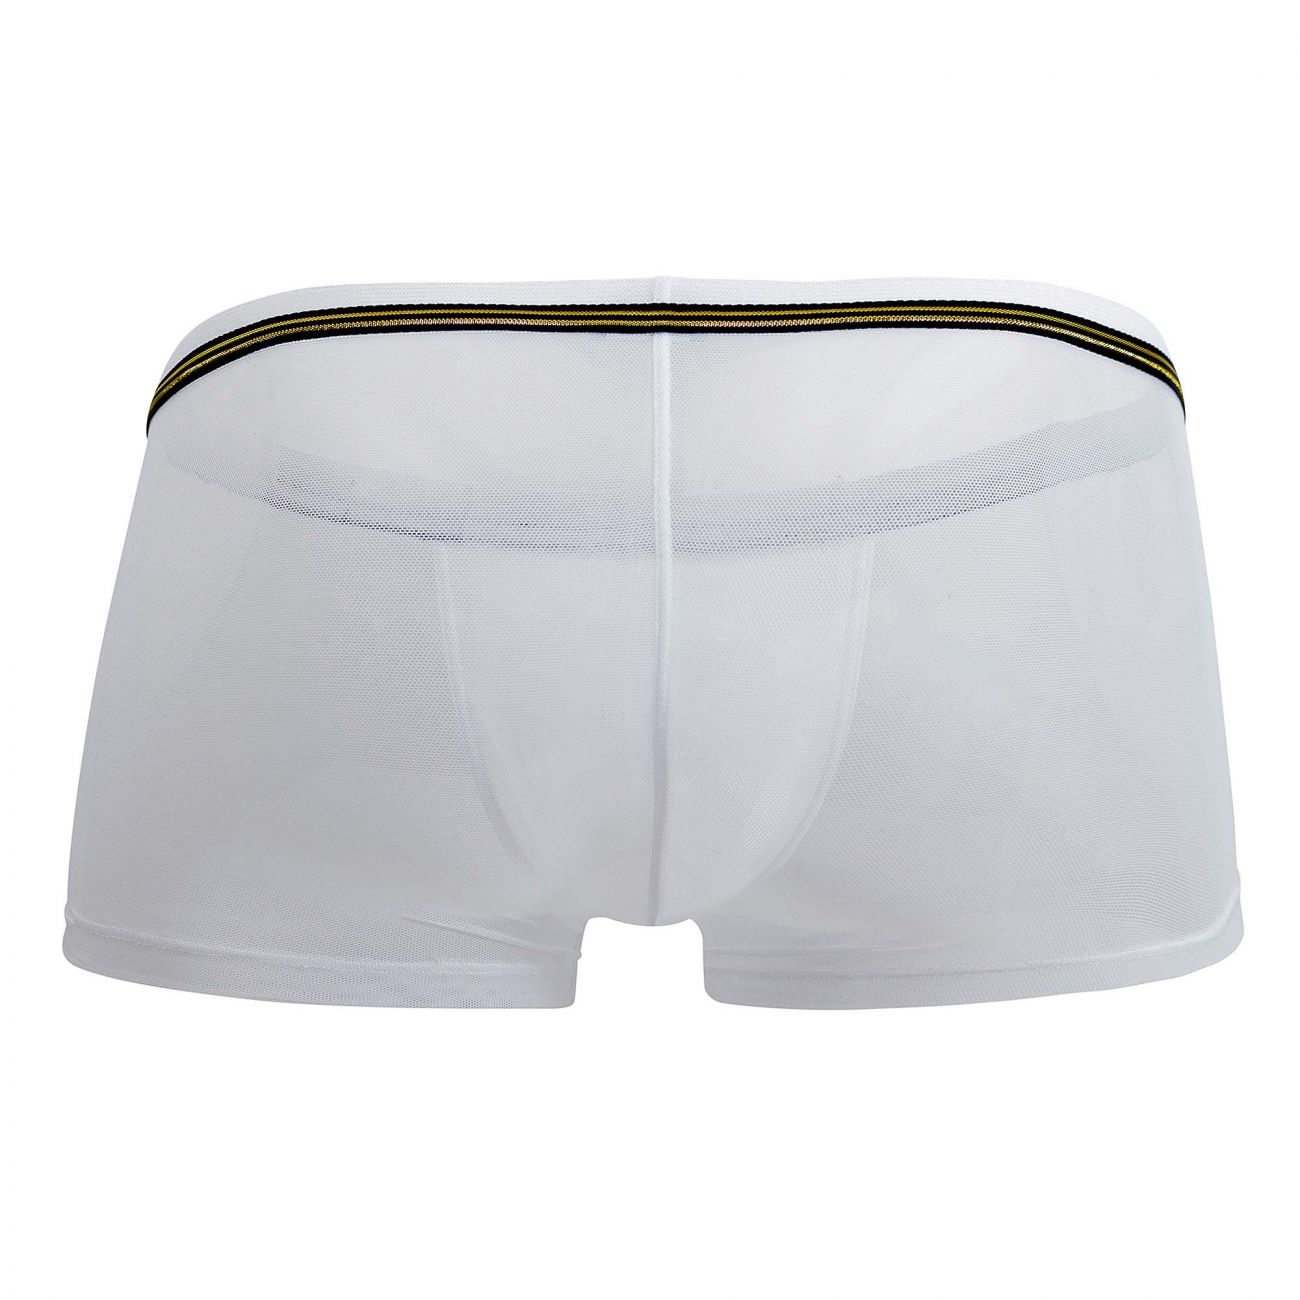 Clever Masculine Male Boxer Briefs Trunks Underwear for Men 